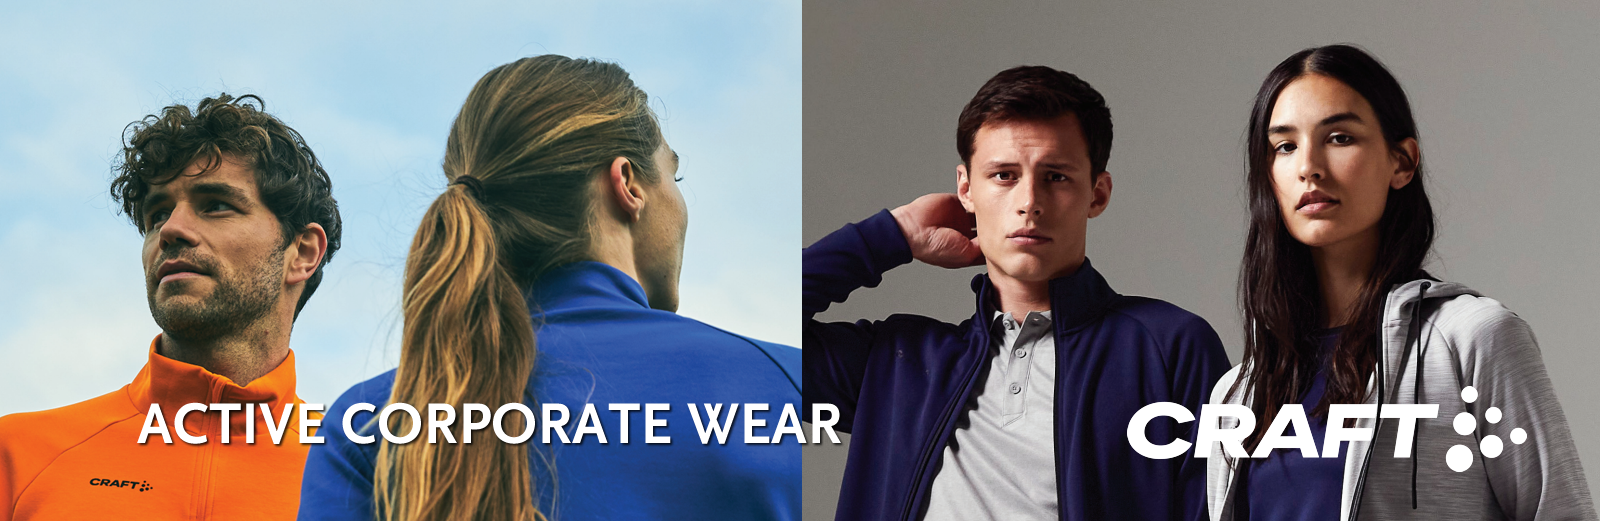 active-corporate-wear